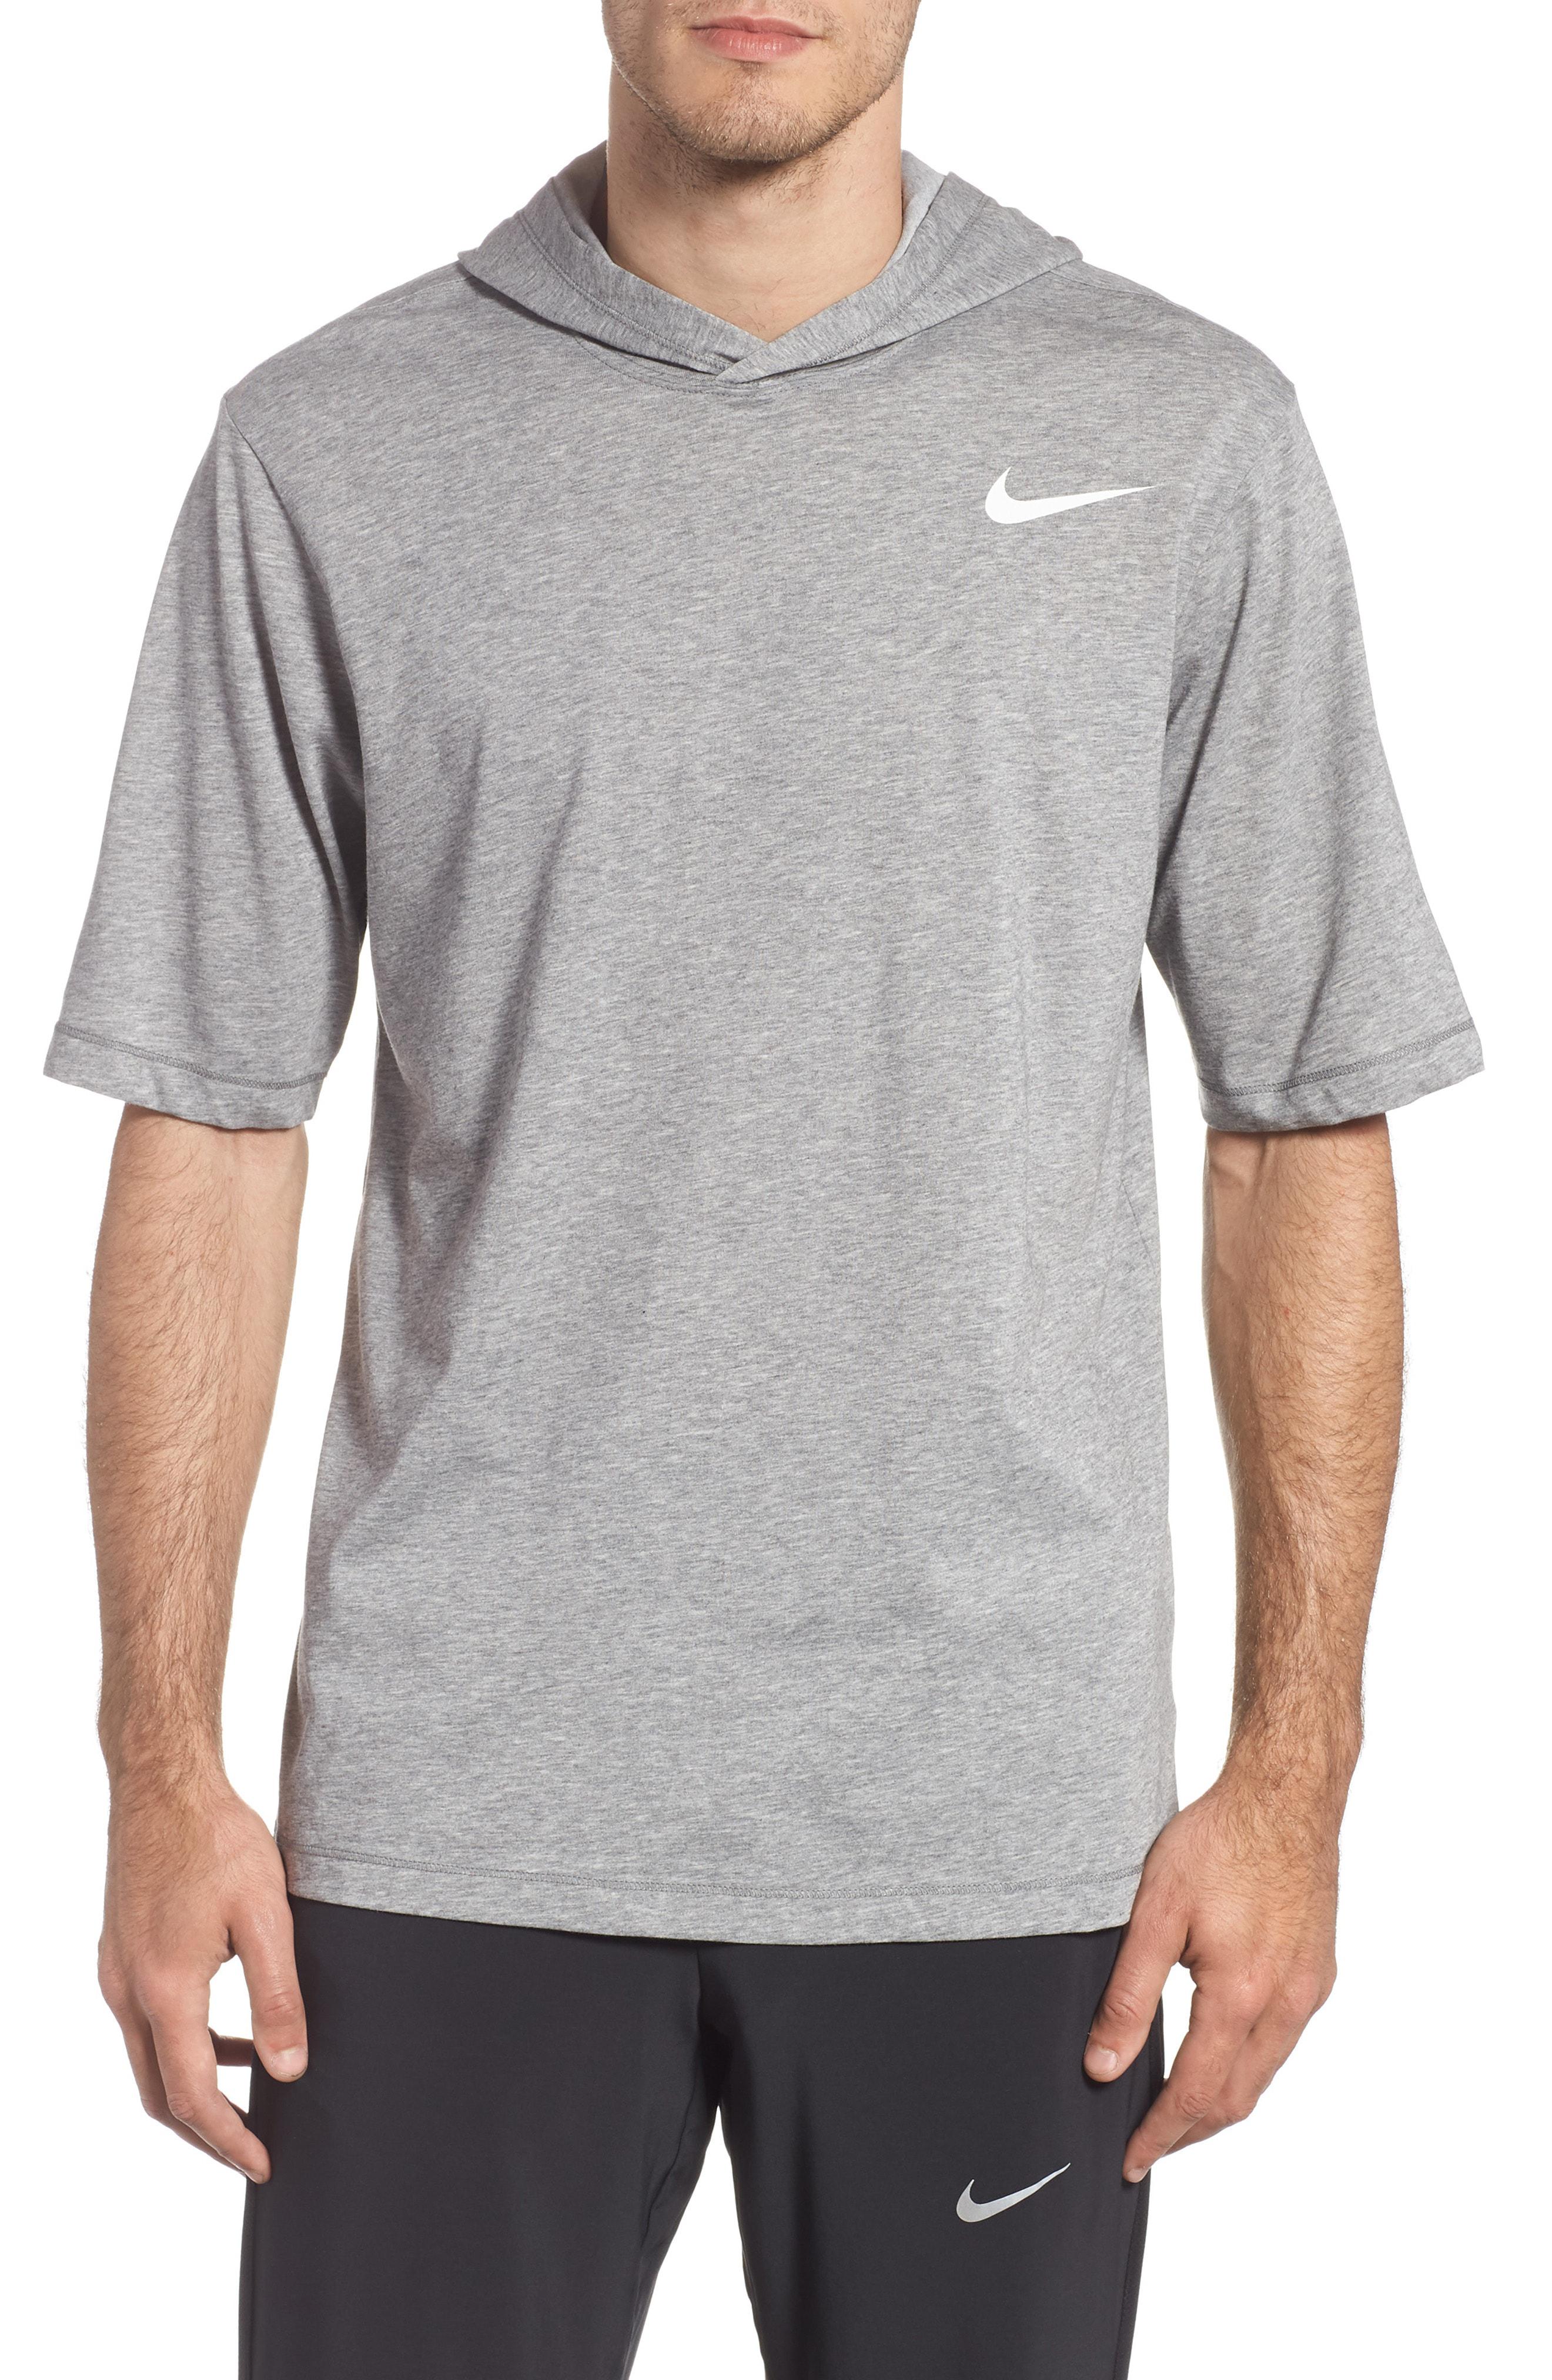 Nike Training Dry Short Sleeve Hoodie in Blue for Men - Lyst